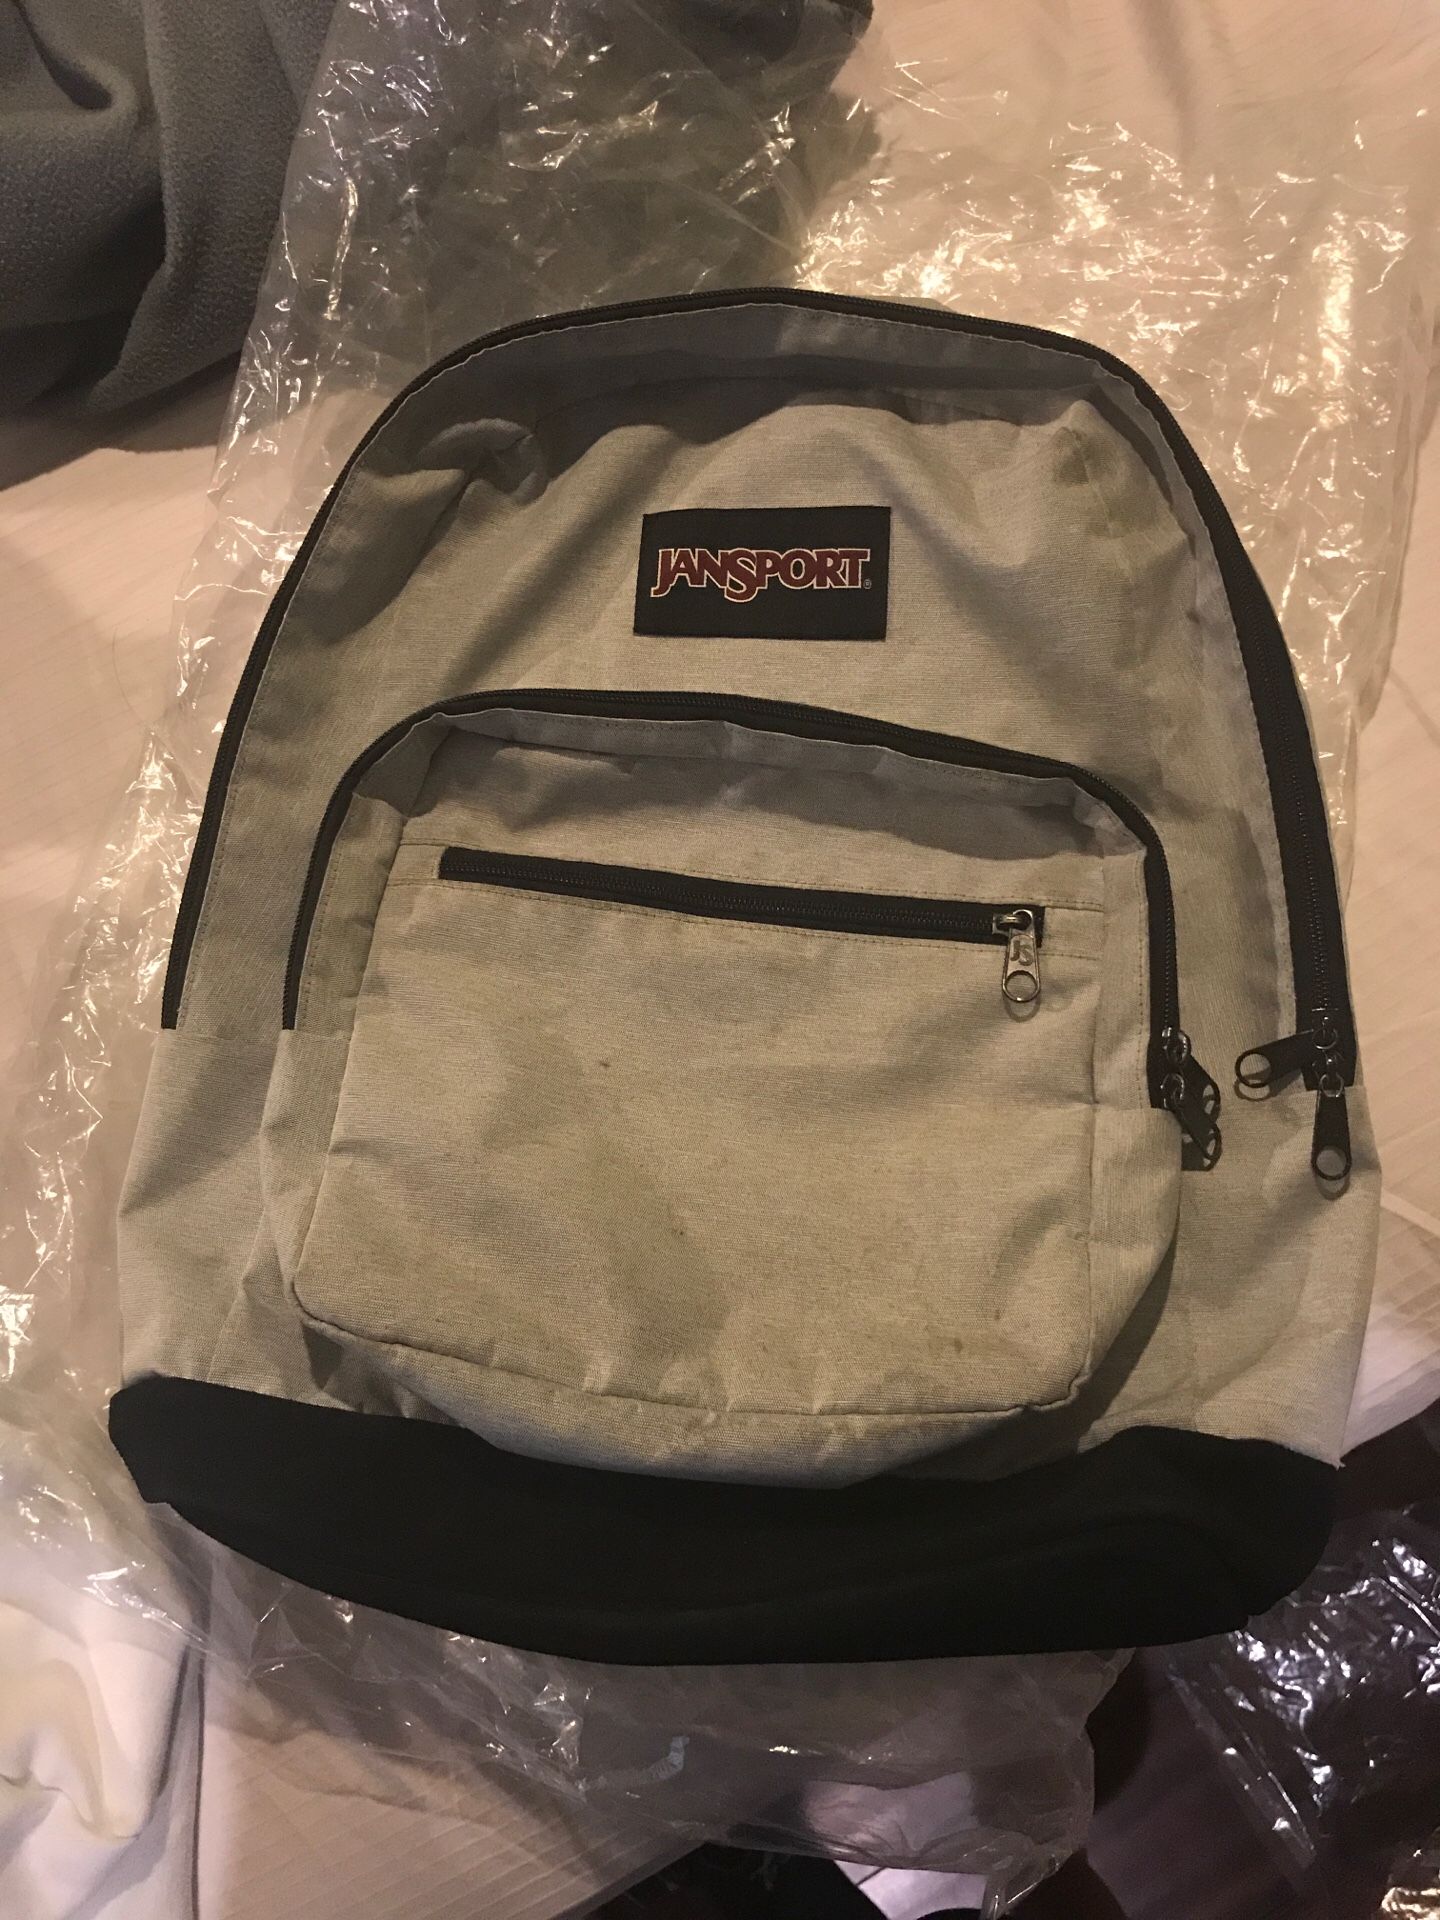 Jansport backpack right pack digital edition